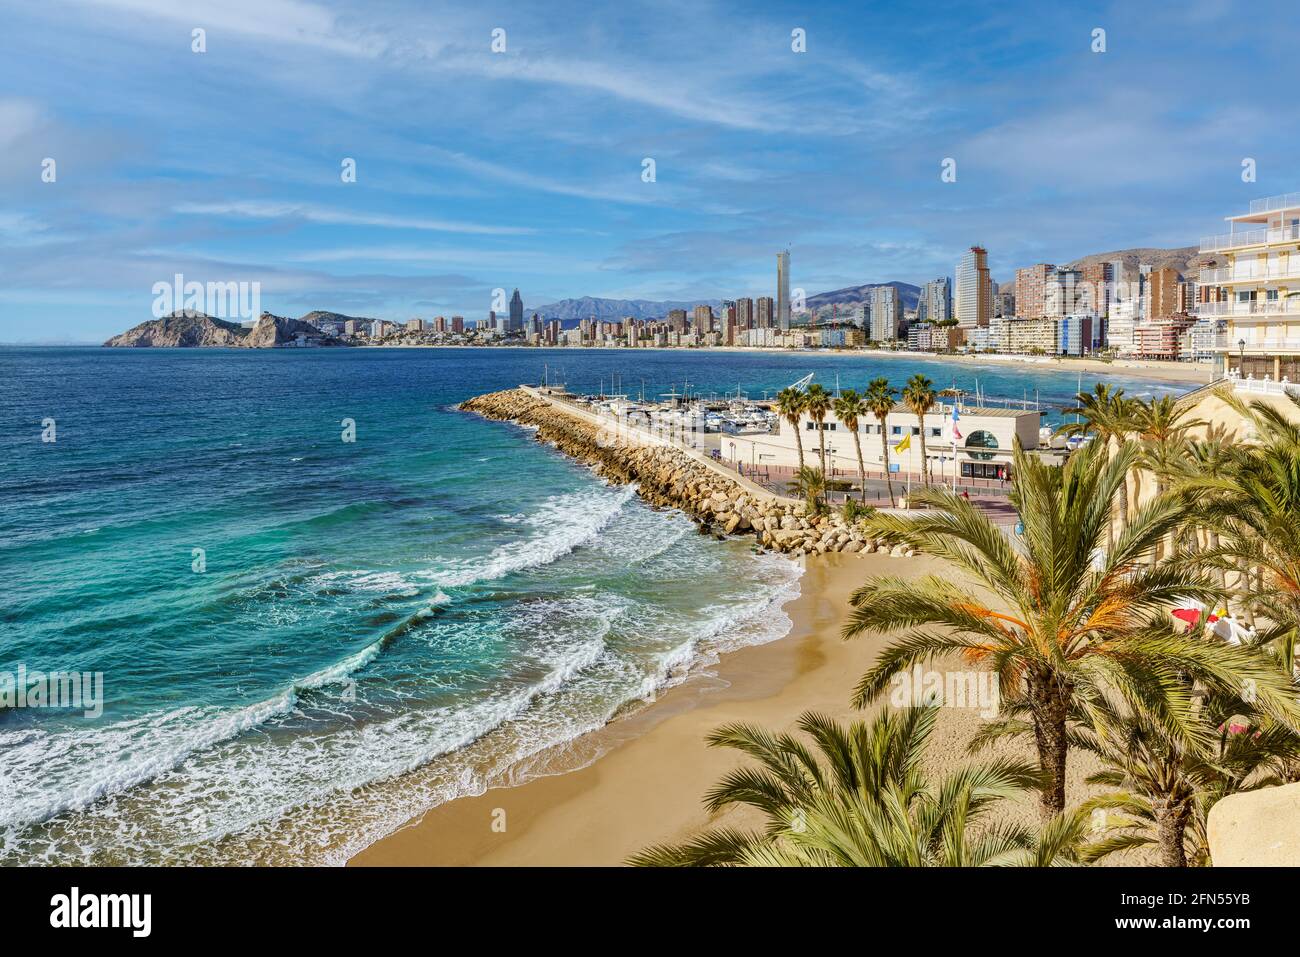 Panoramablick auf den Playa de Poniente in Benidorm, der berühmten Urlaubsstadt an der spanischen Mittelmeerküste Stockfoto